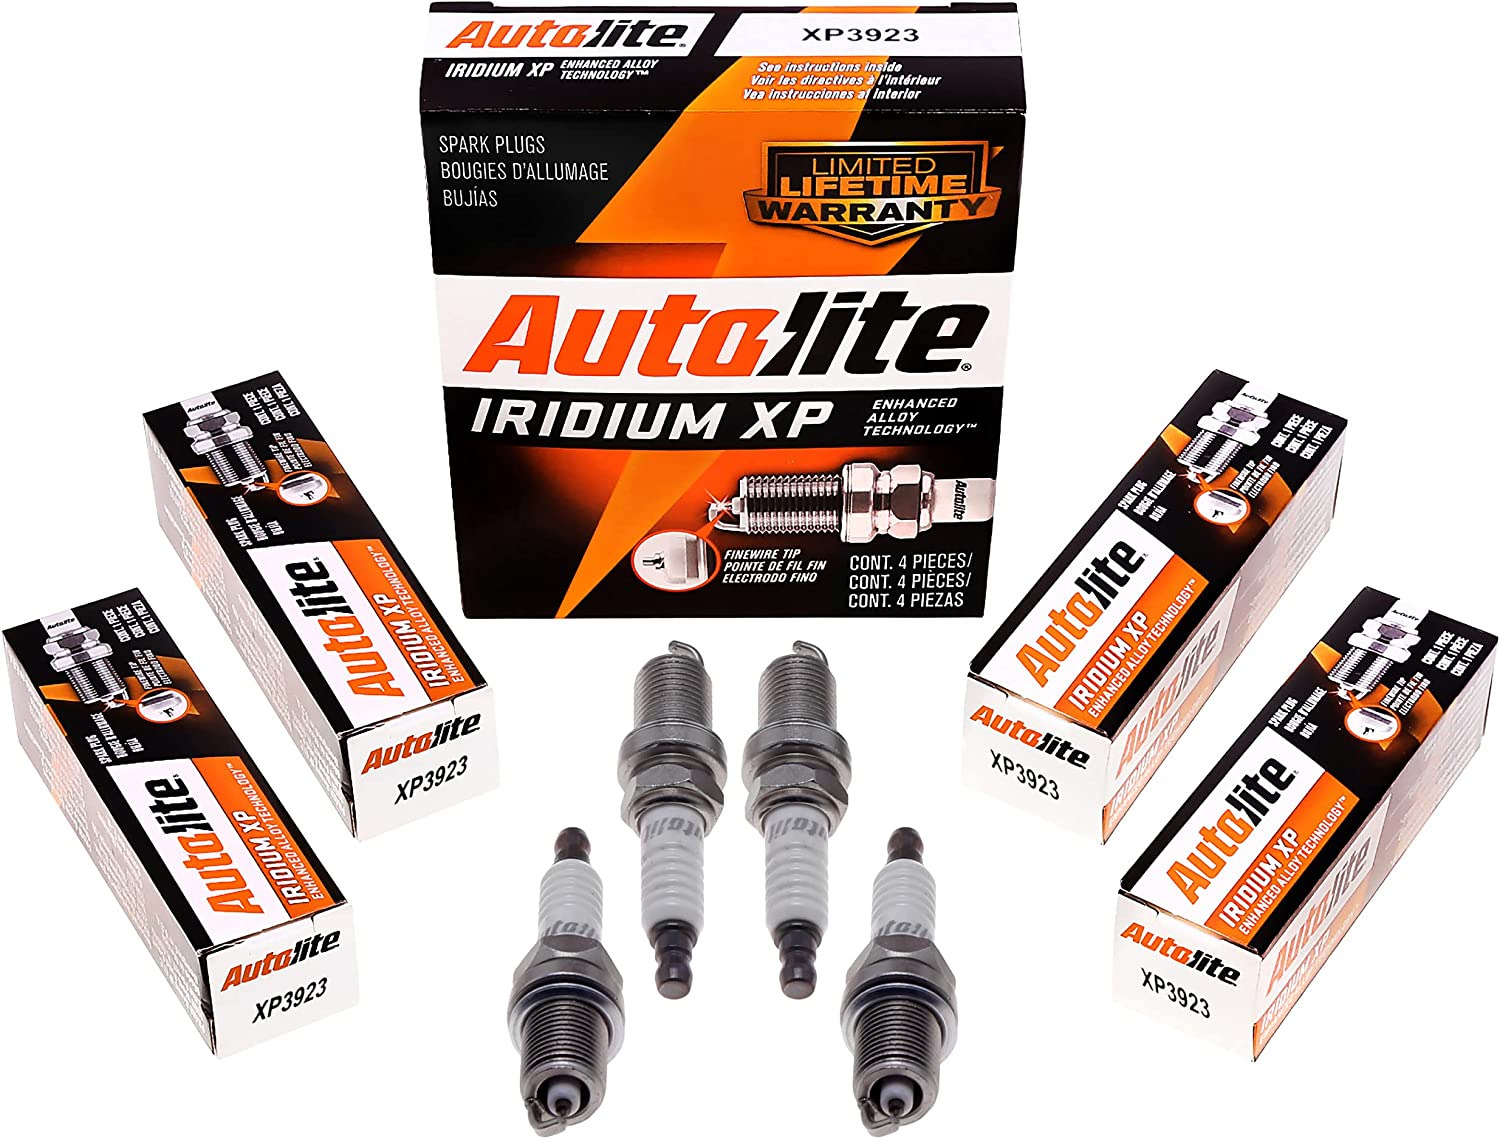 Iridium XP Automotive Replacement Spark Plugs, XP3923 (4 Pack)